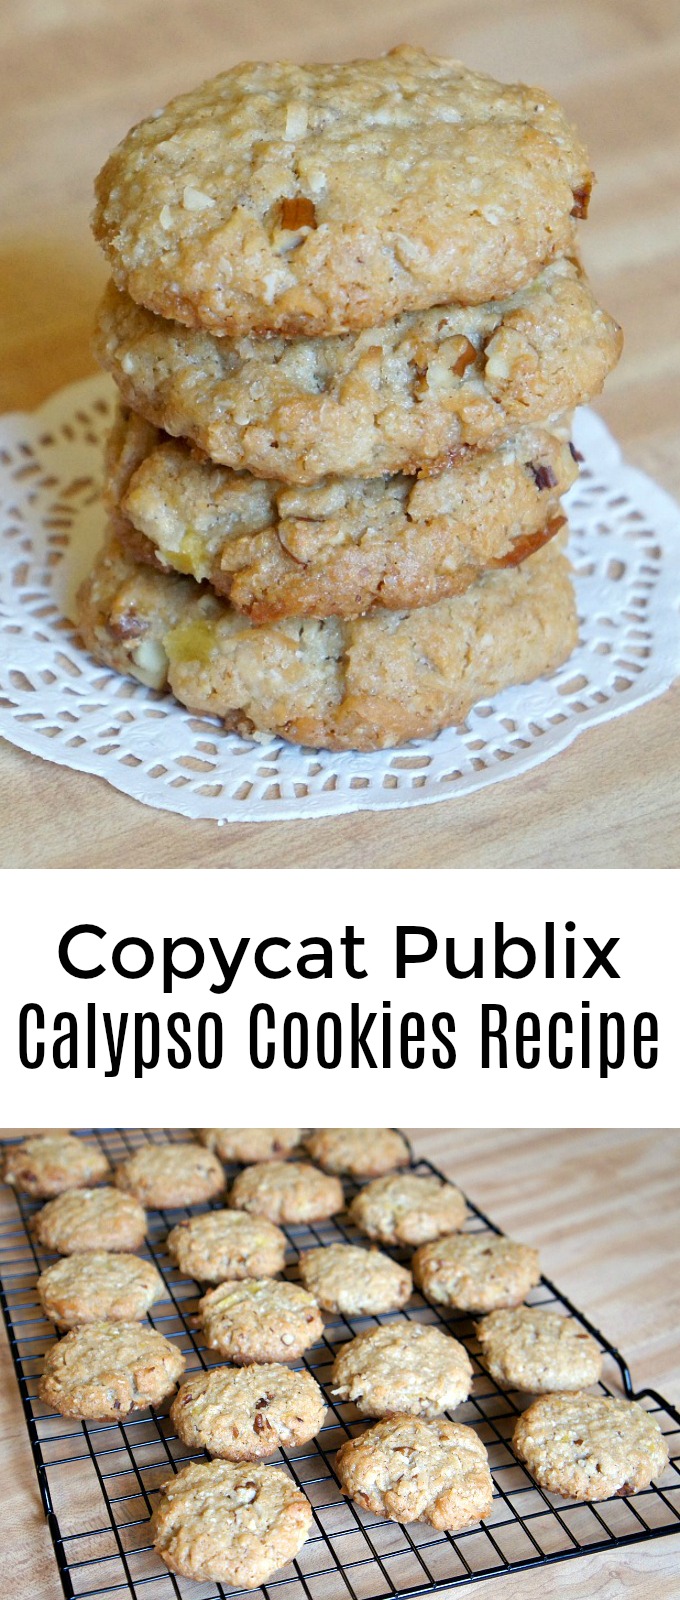 Copycat Publix Calypso Cookies Recipe The Rebel Chick